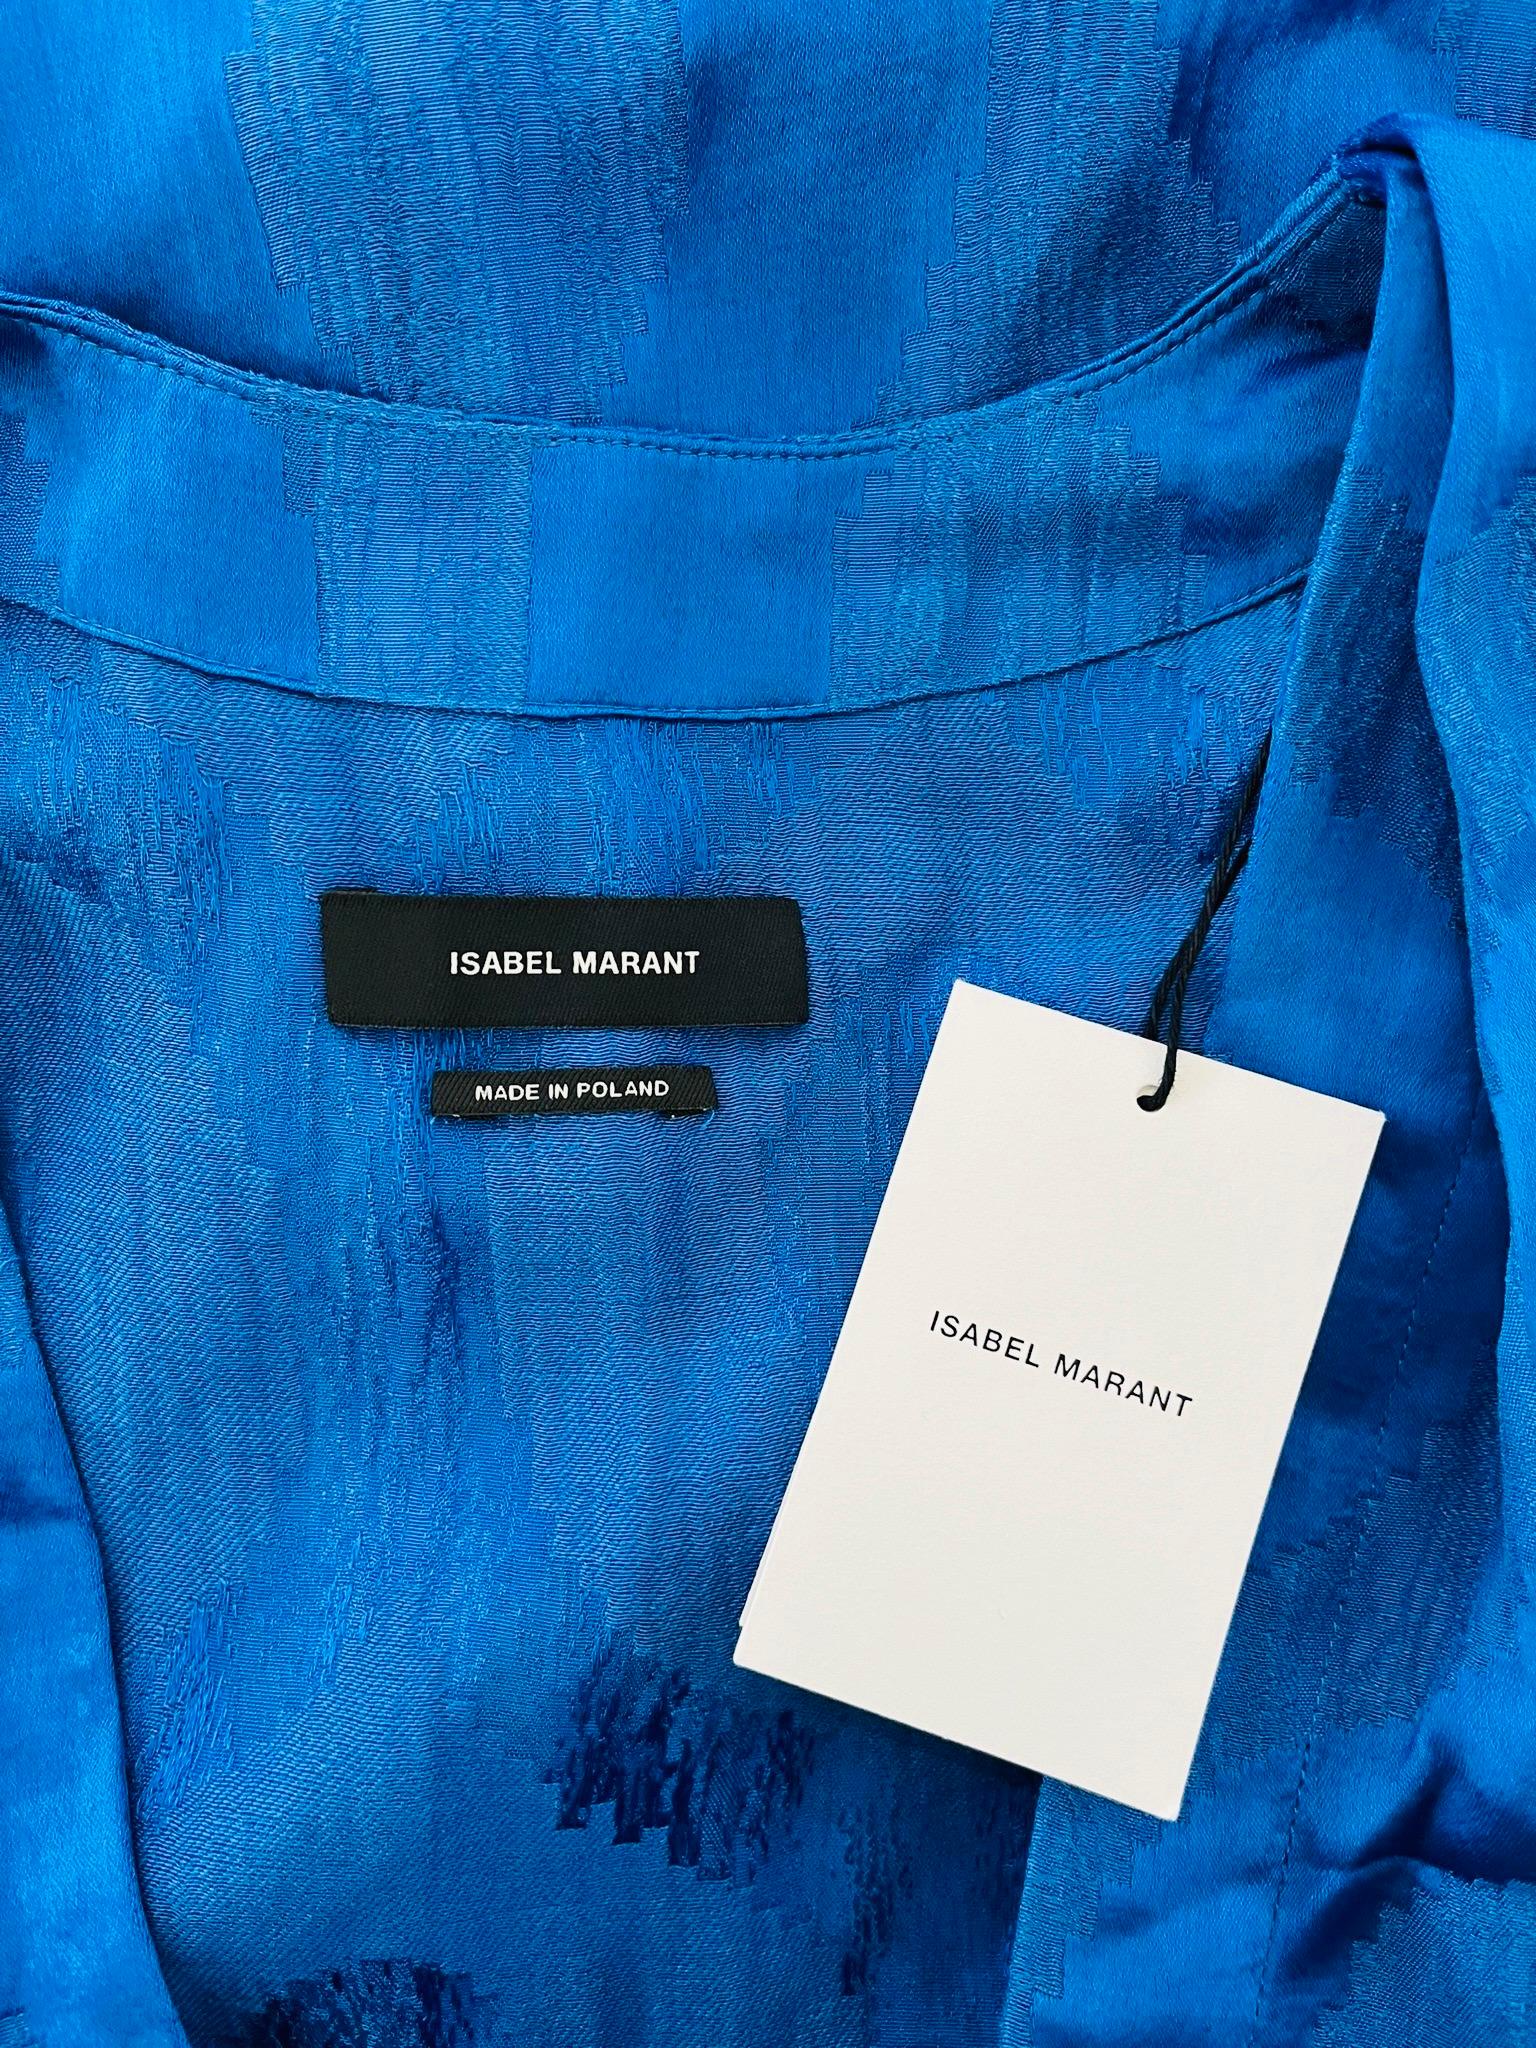 Isabel Marant Satin-Jacquard Dress For Sale 2